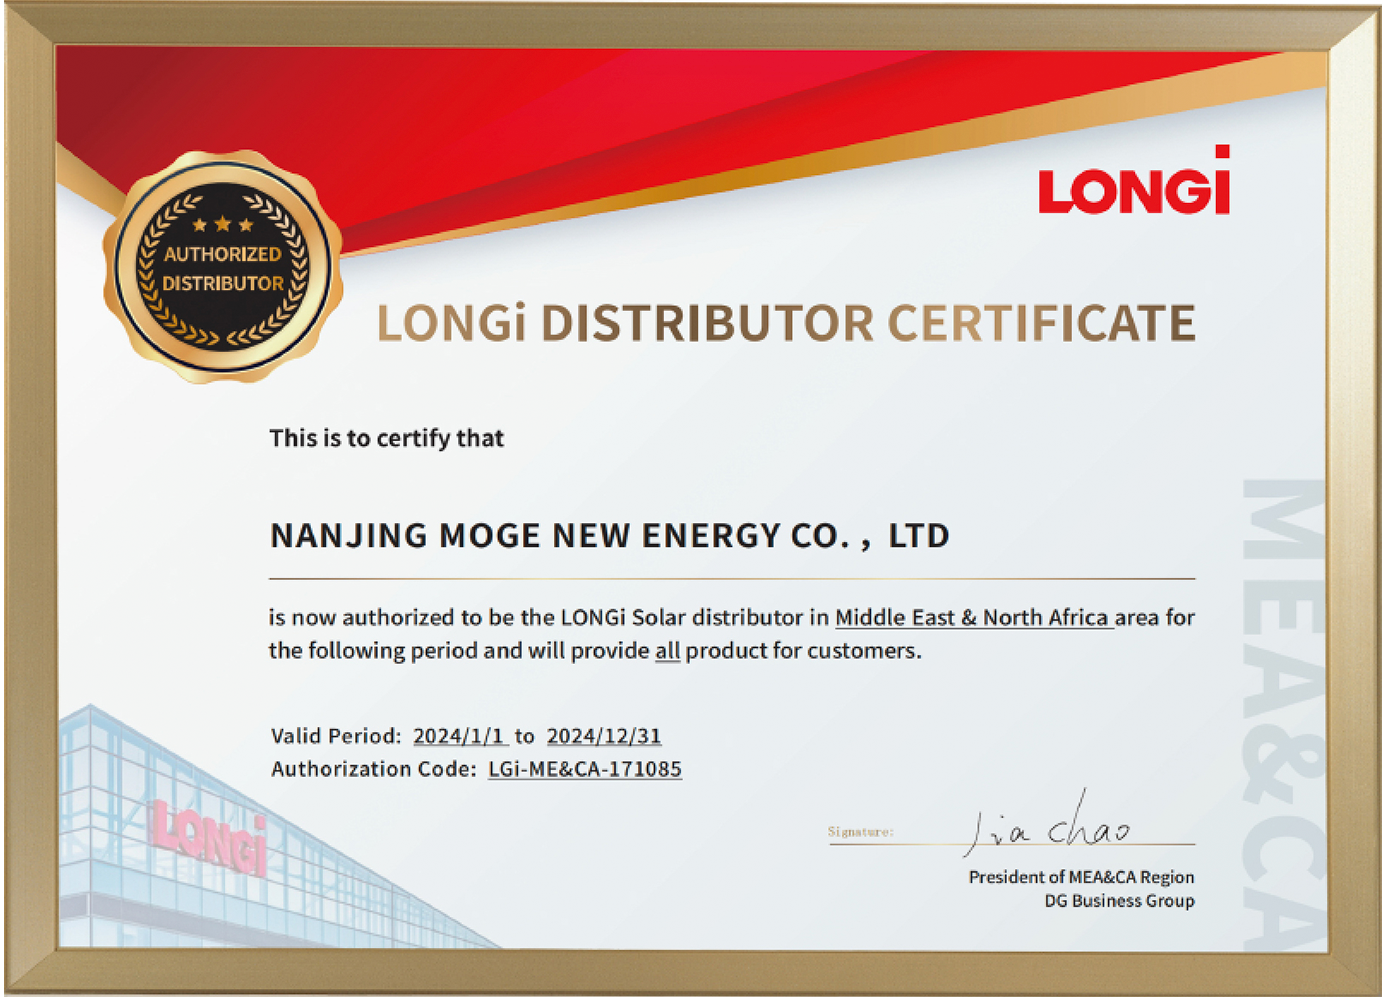 LONGI Solar certificate